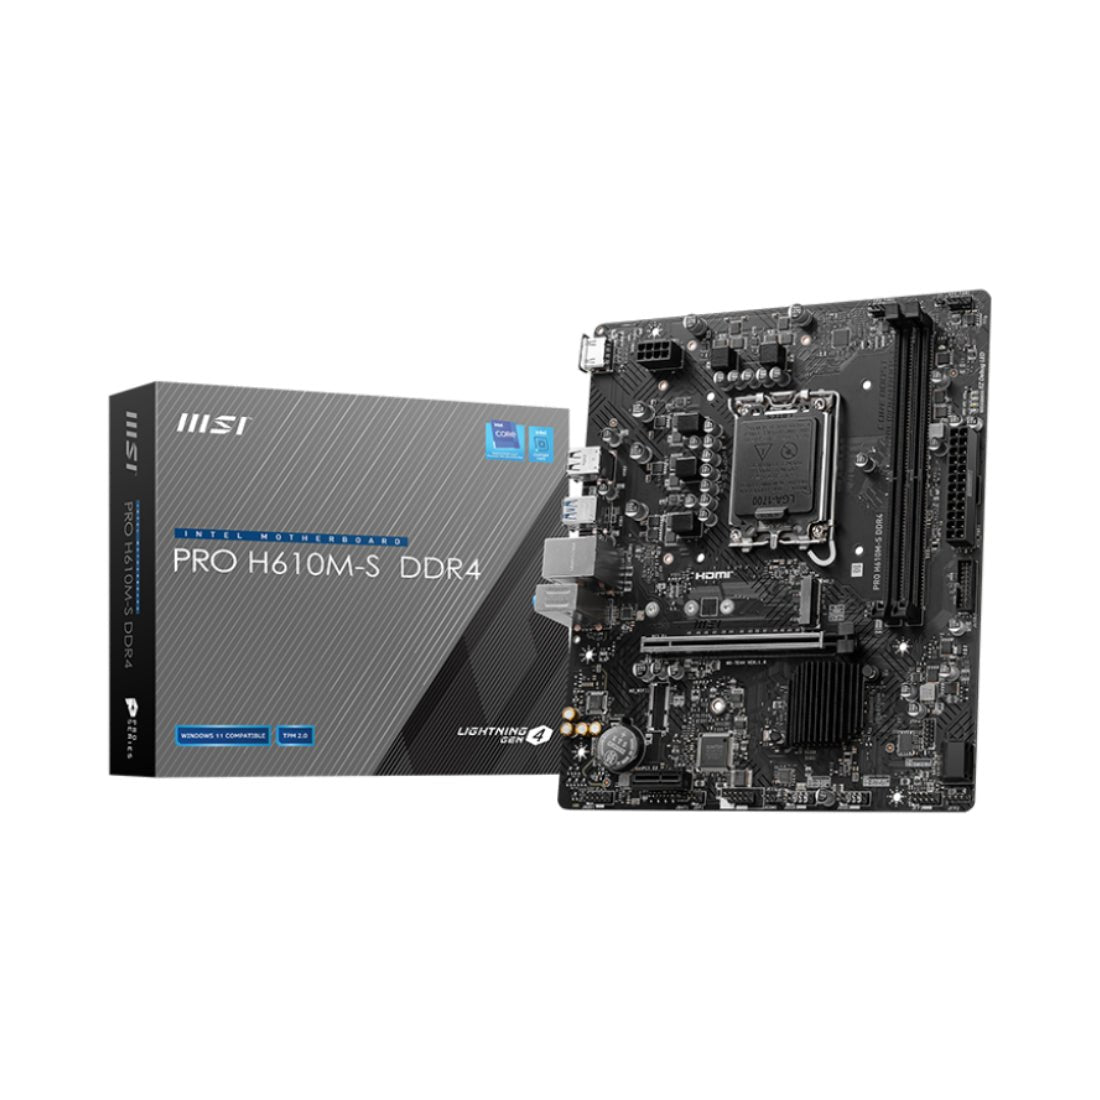 MSI PRO H610M-S WIFI DDR4 LGA 1700 Intel mATX 14th Gen Gaming Motherboard - اللوحة الأم - Store 974 | ستور ٩٧٤